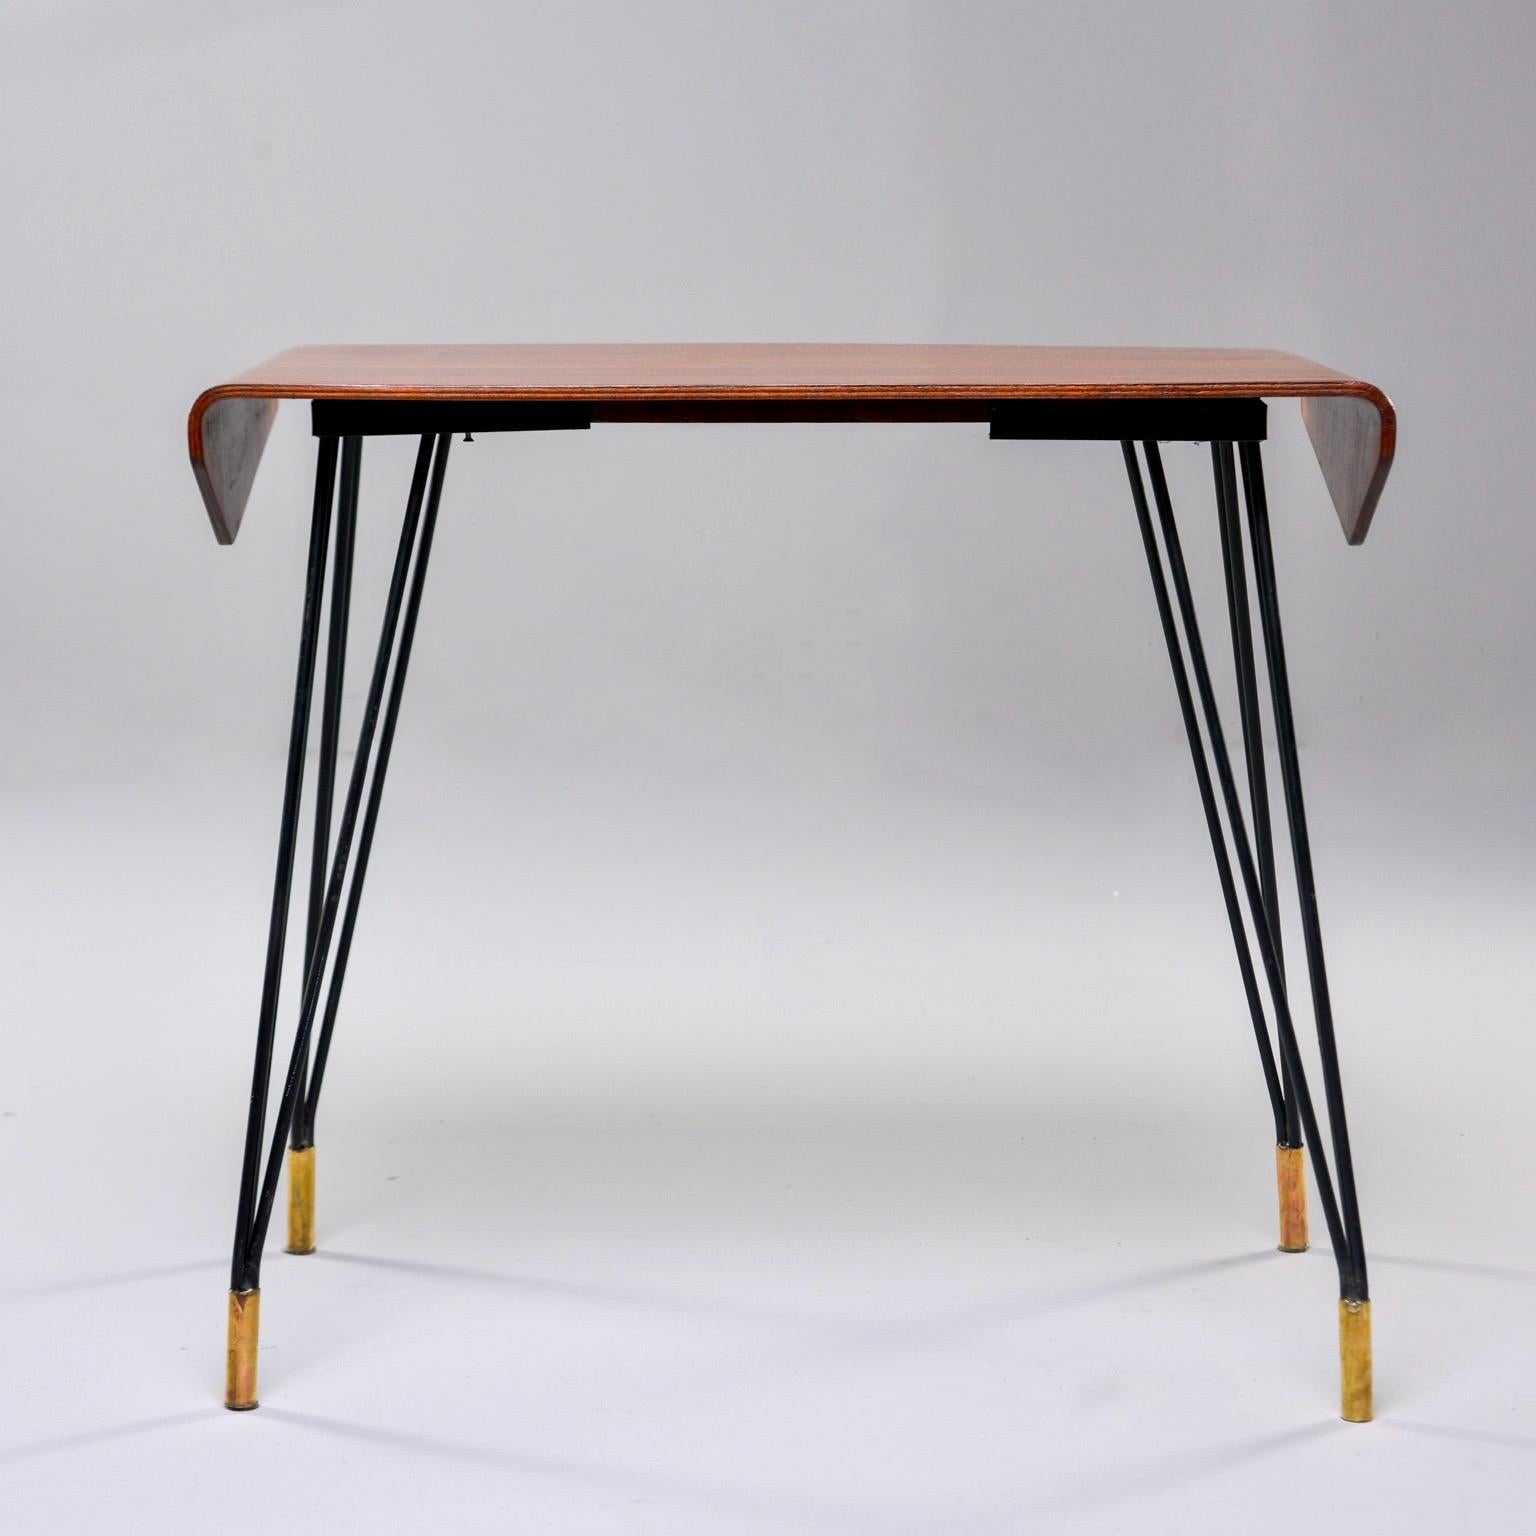 20th Century Italian Midcentury Bent Wood Table with Iron Legs and Brass Feet